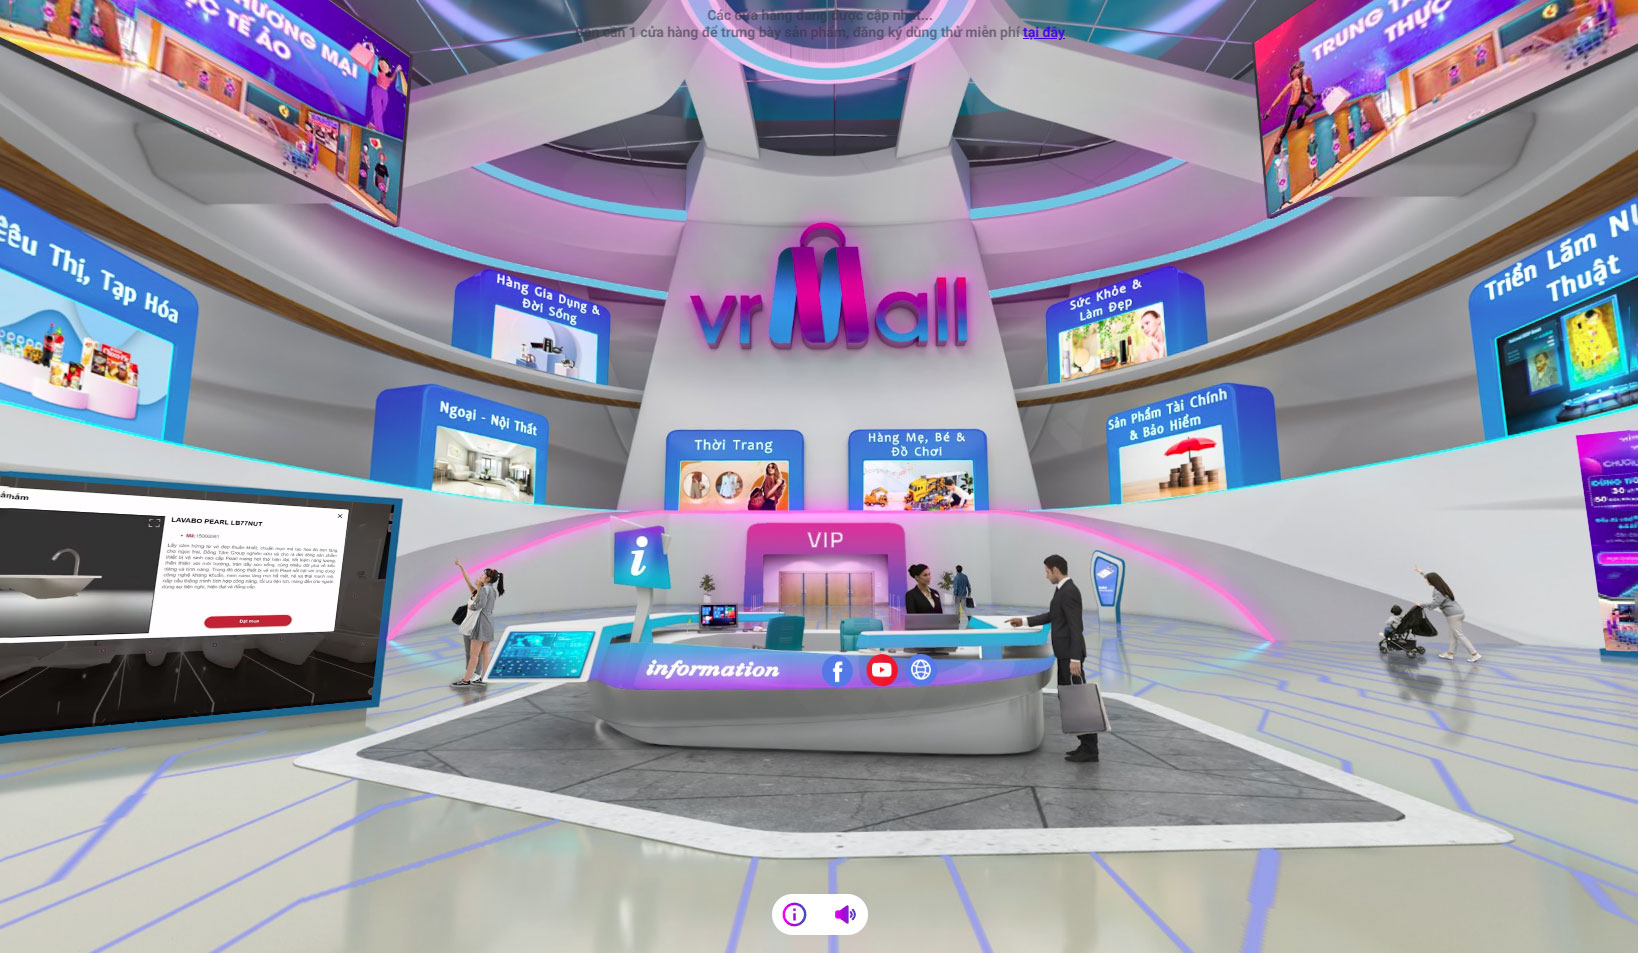 VR Mall